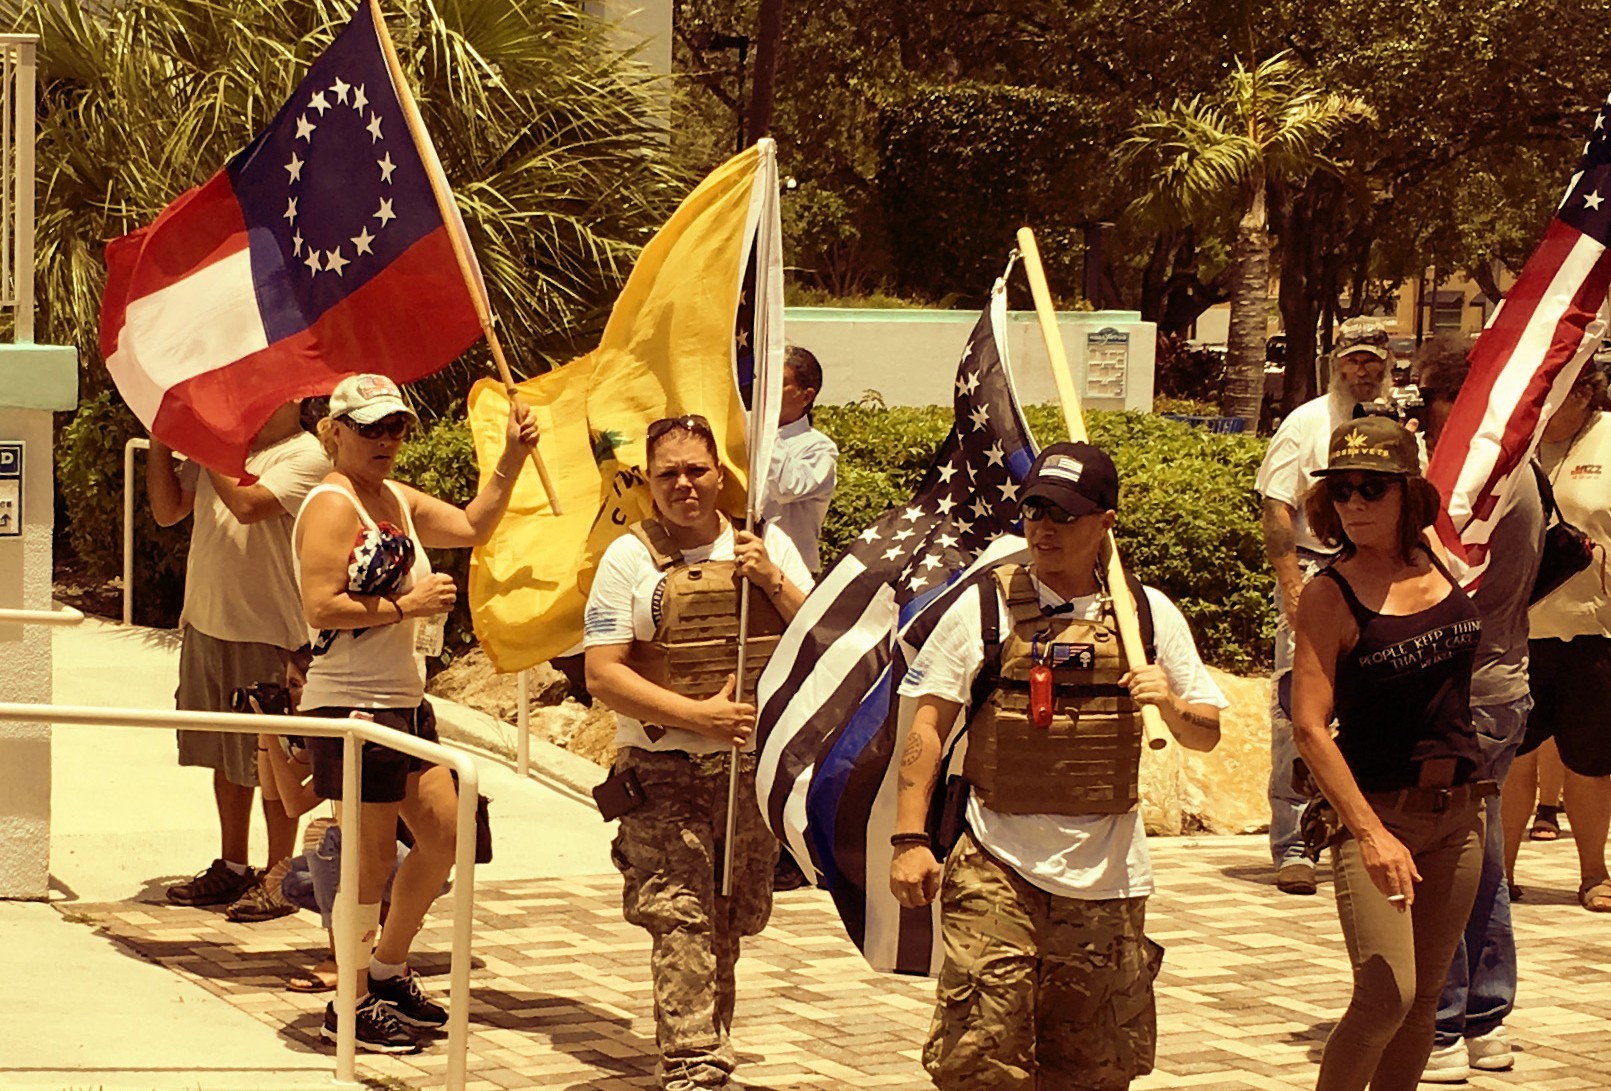 Hollywood, FL: Neo-Nazi, Neo-Confederate Rally Backfires